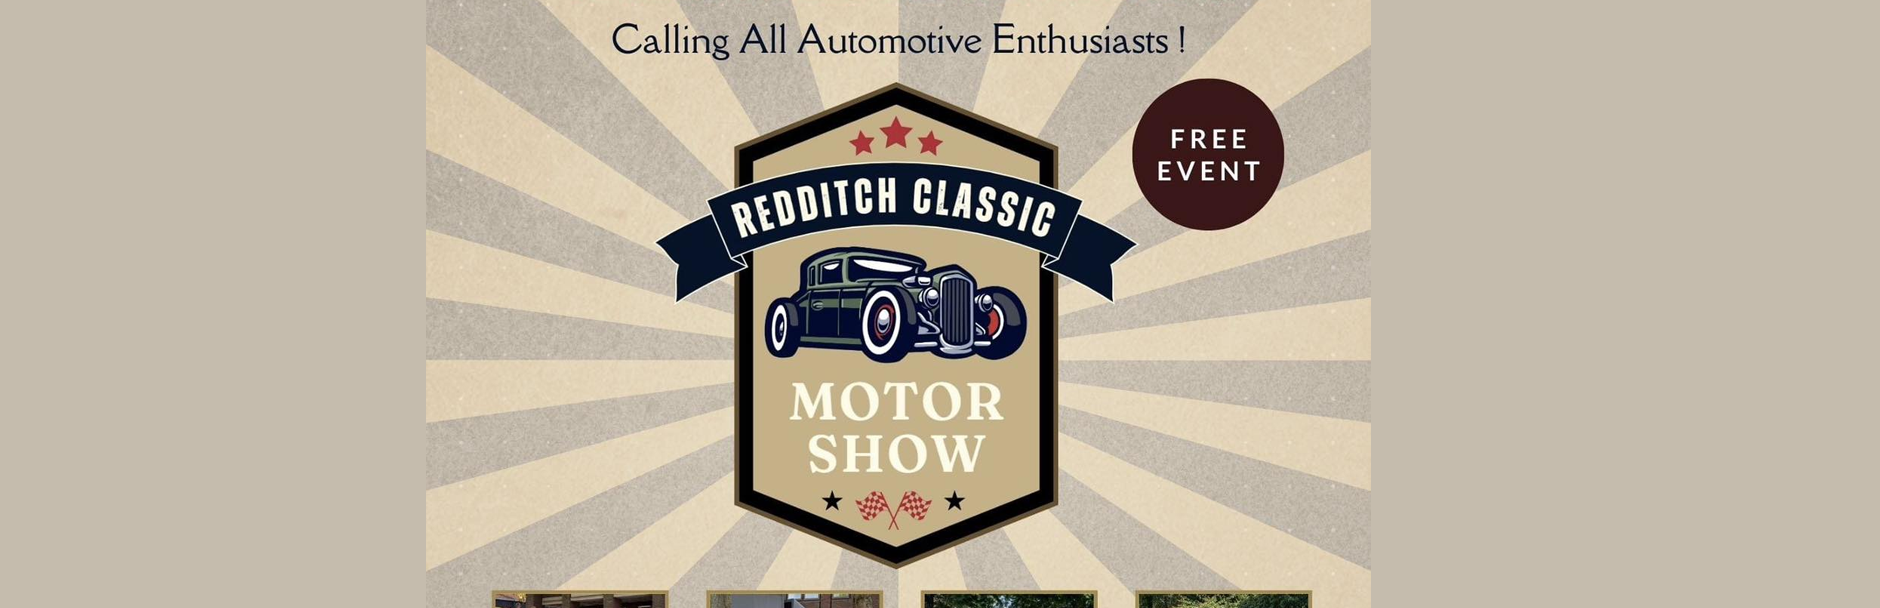 Redditch Classic MotorShow